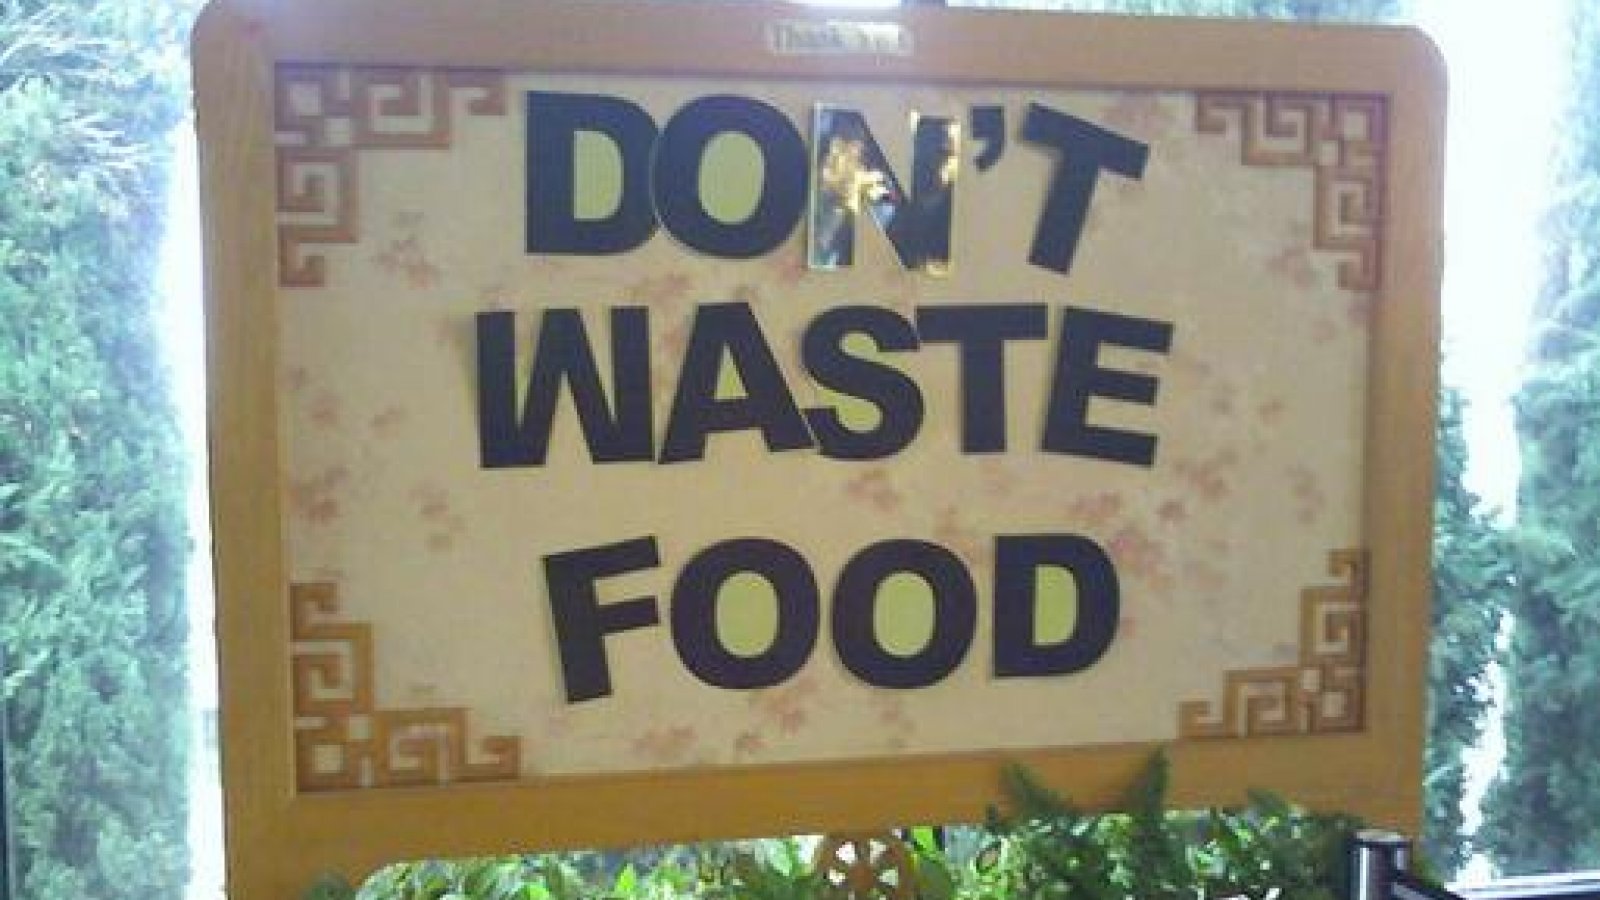 DAMn food waste